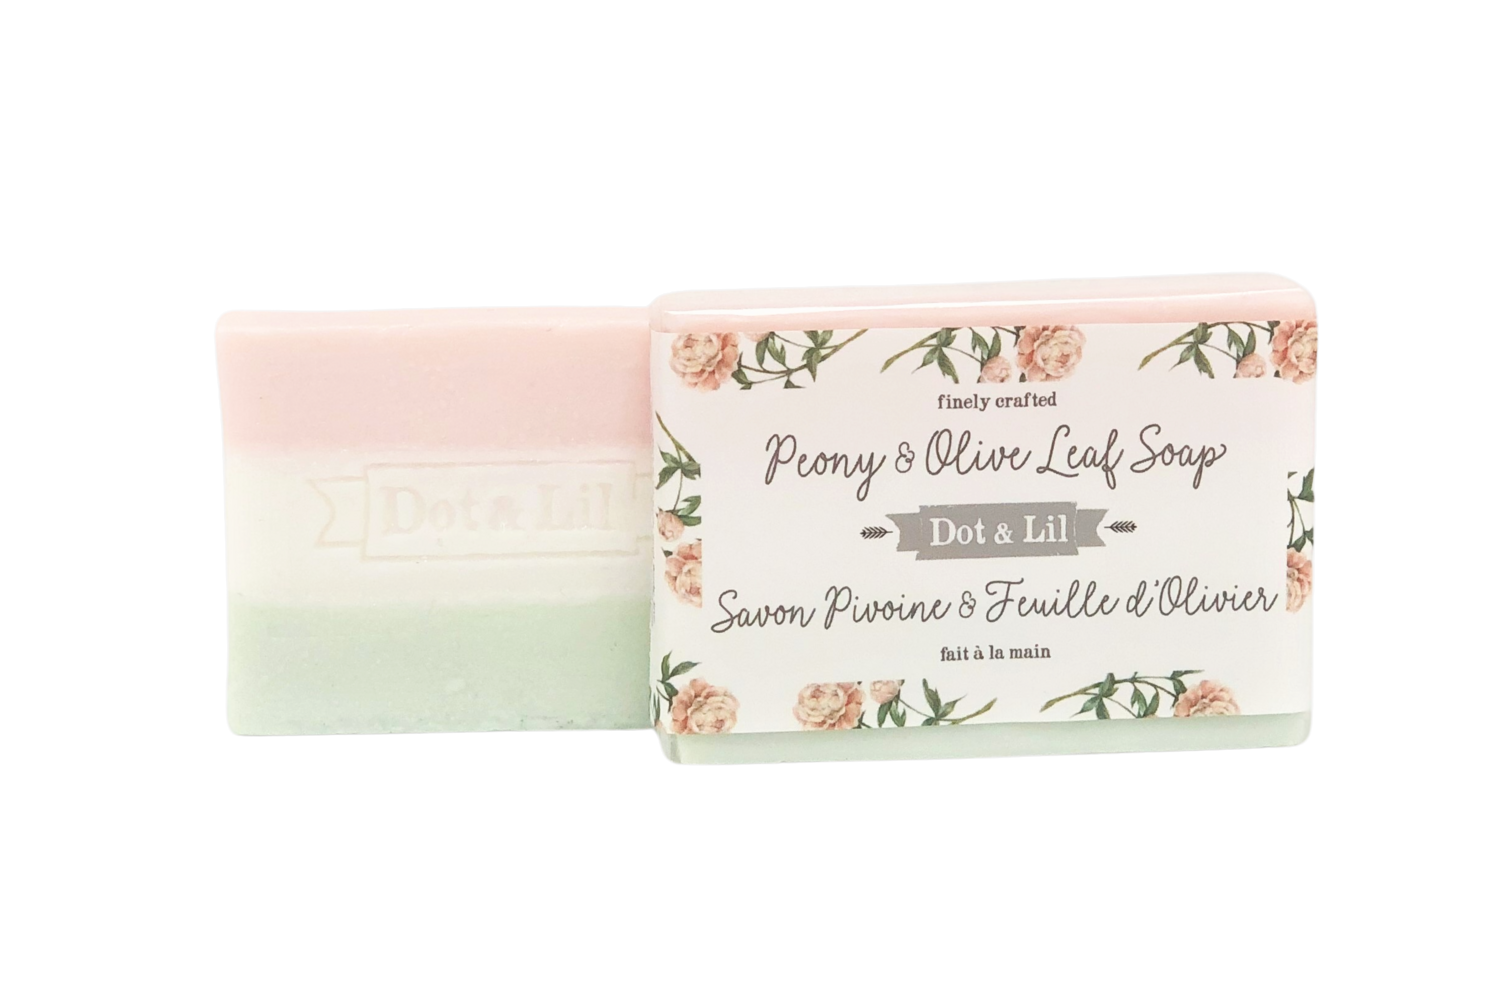 Dot & Lil Peony & Olive Leaf Soap Bar